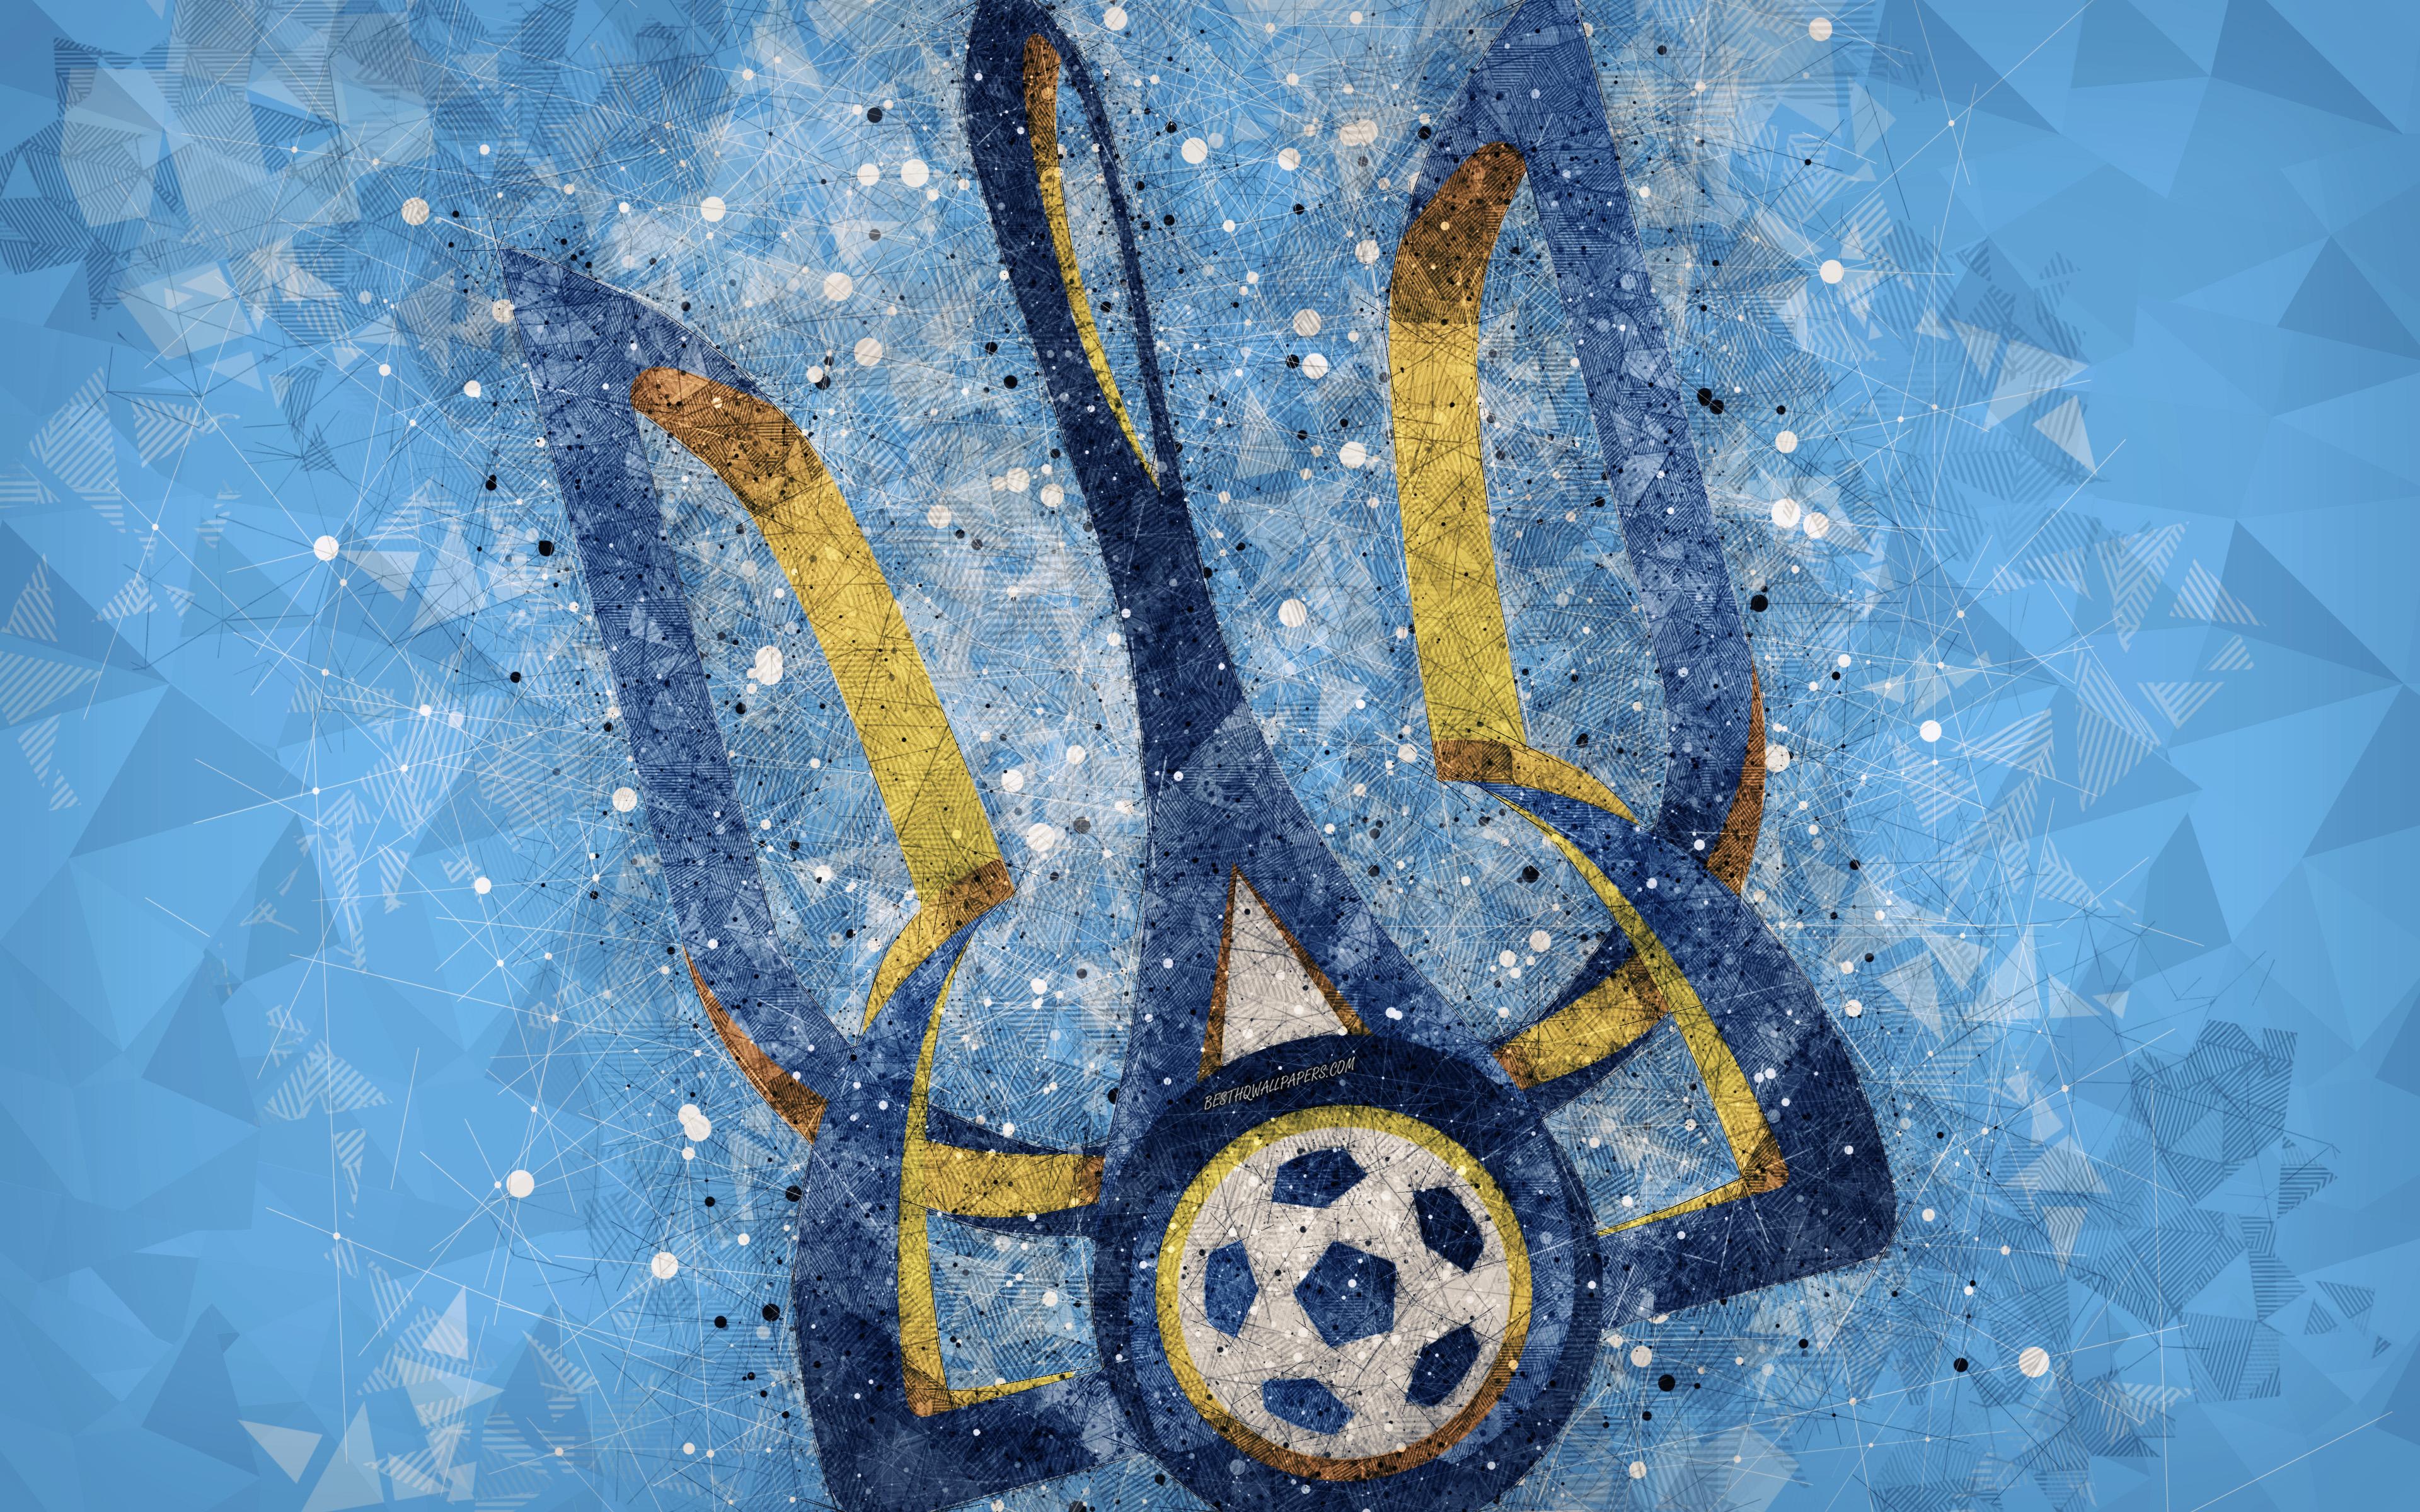 Ukraine National Football Team 4k Ultra HD Wallpaper. Background